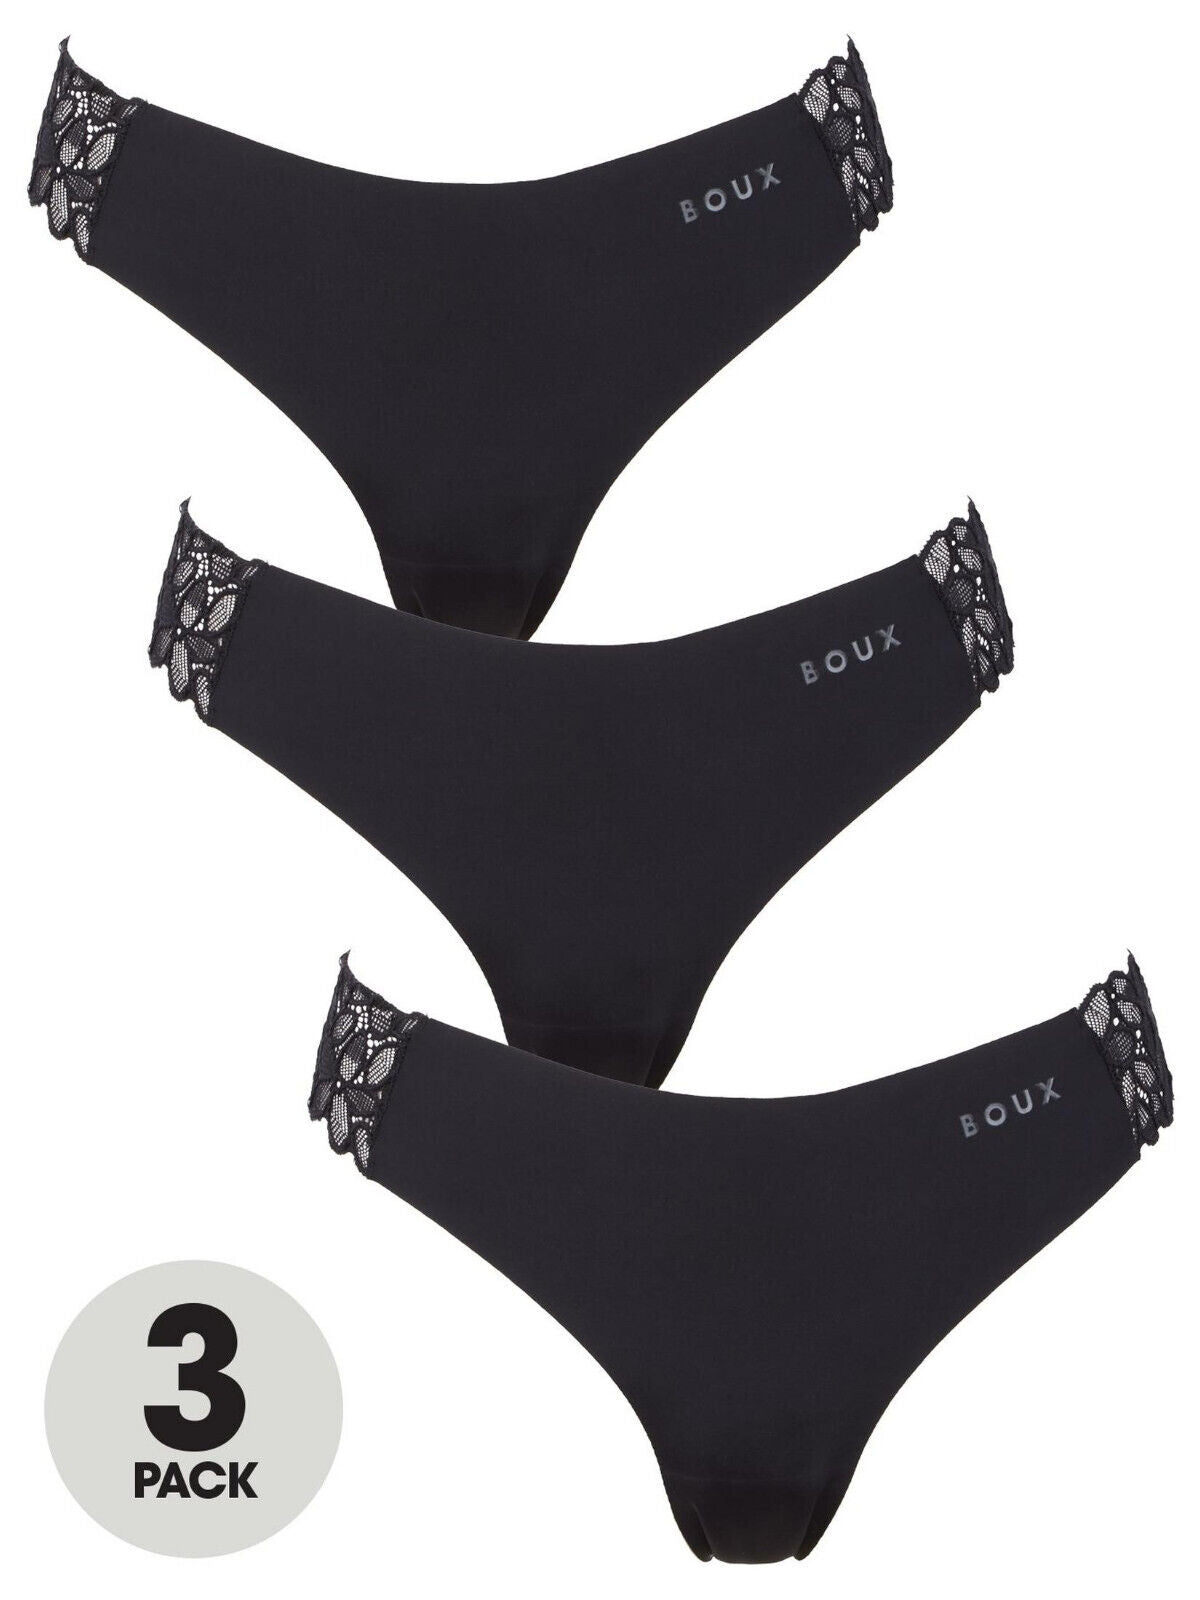 Boux Avenue Tallula Black Thong (3 Pack) Size 6 ** V513